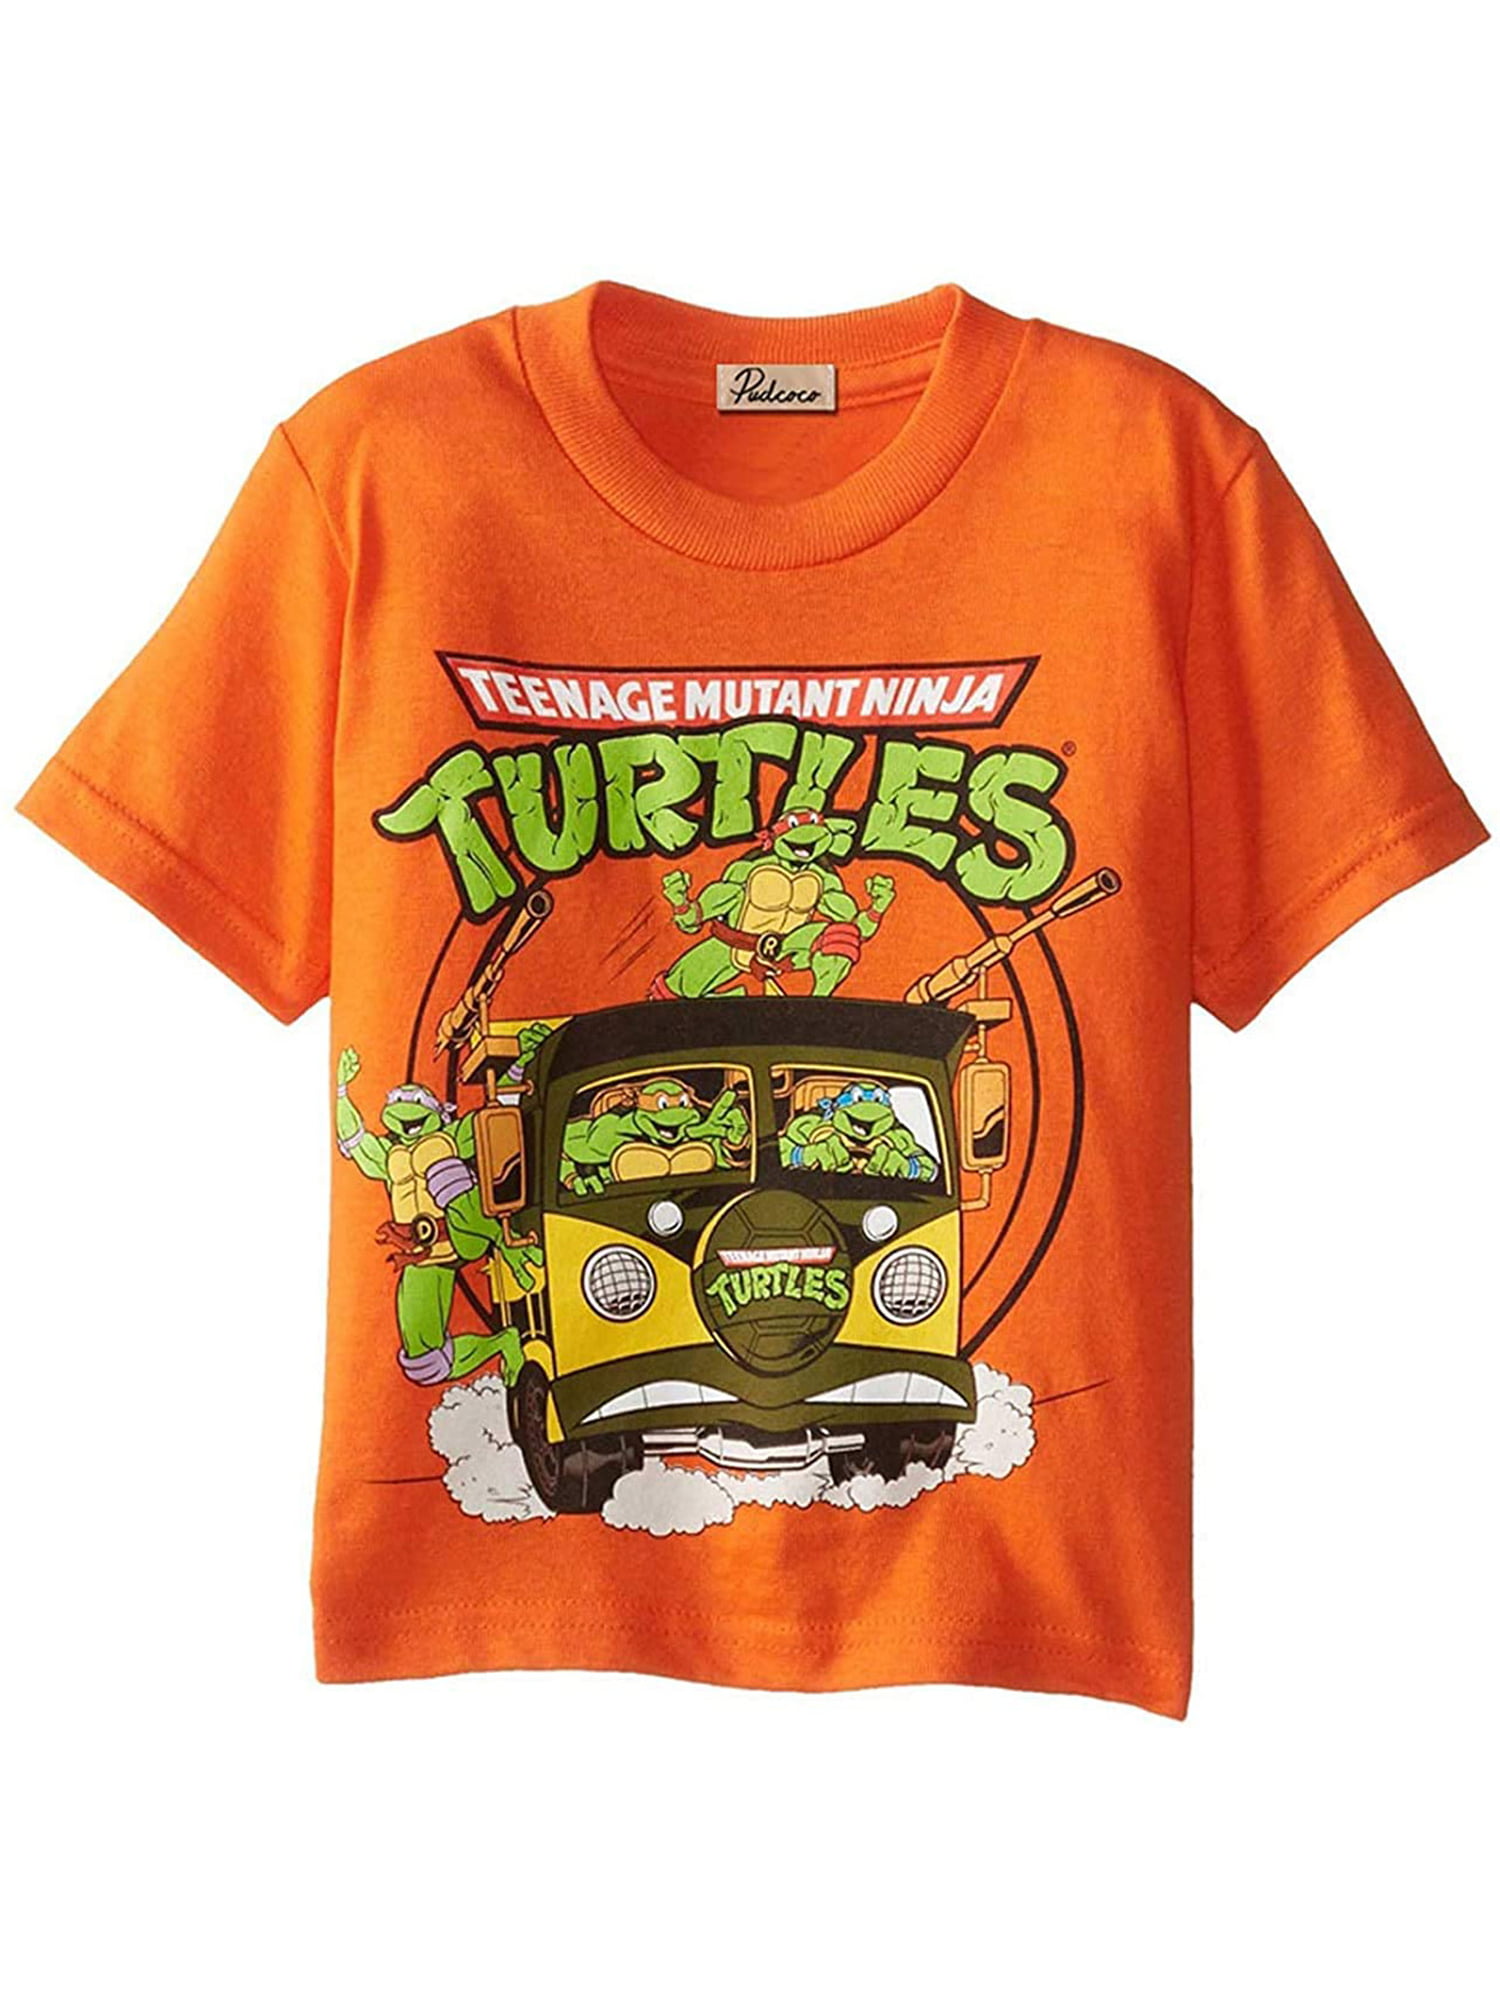 Aunavey Toddler Kids Boys Cartoon Short Sleeve Tee Teenage Mutant Ninja Turtles T-shirt Top